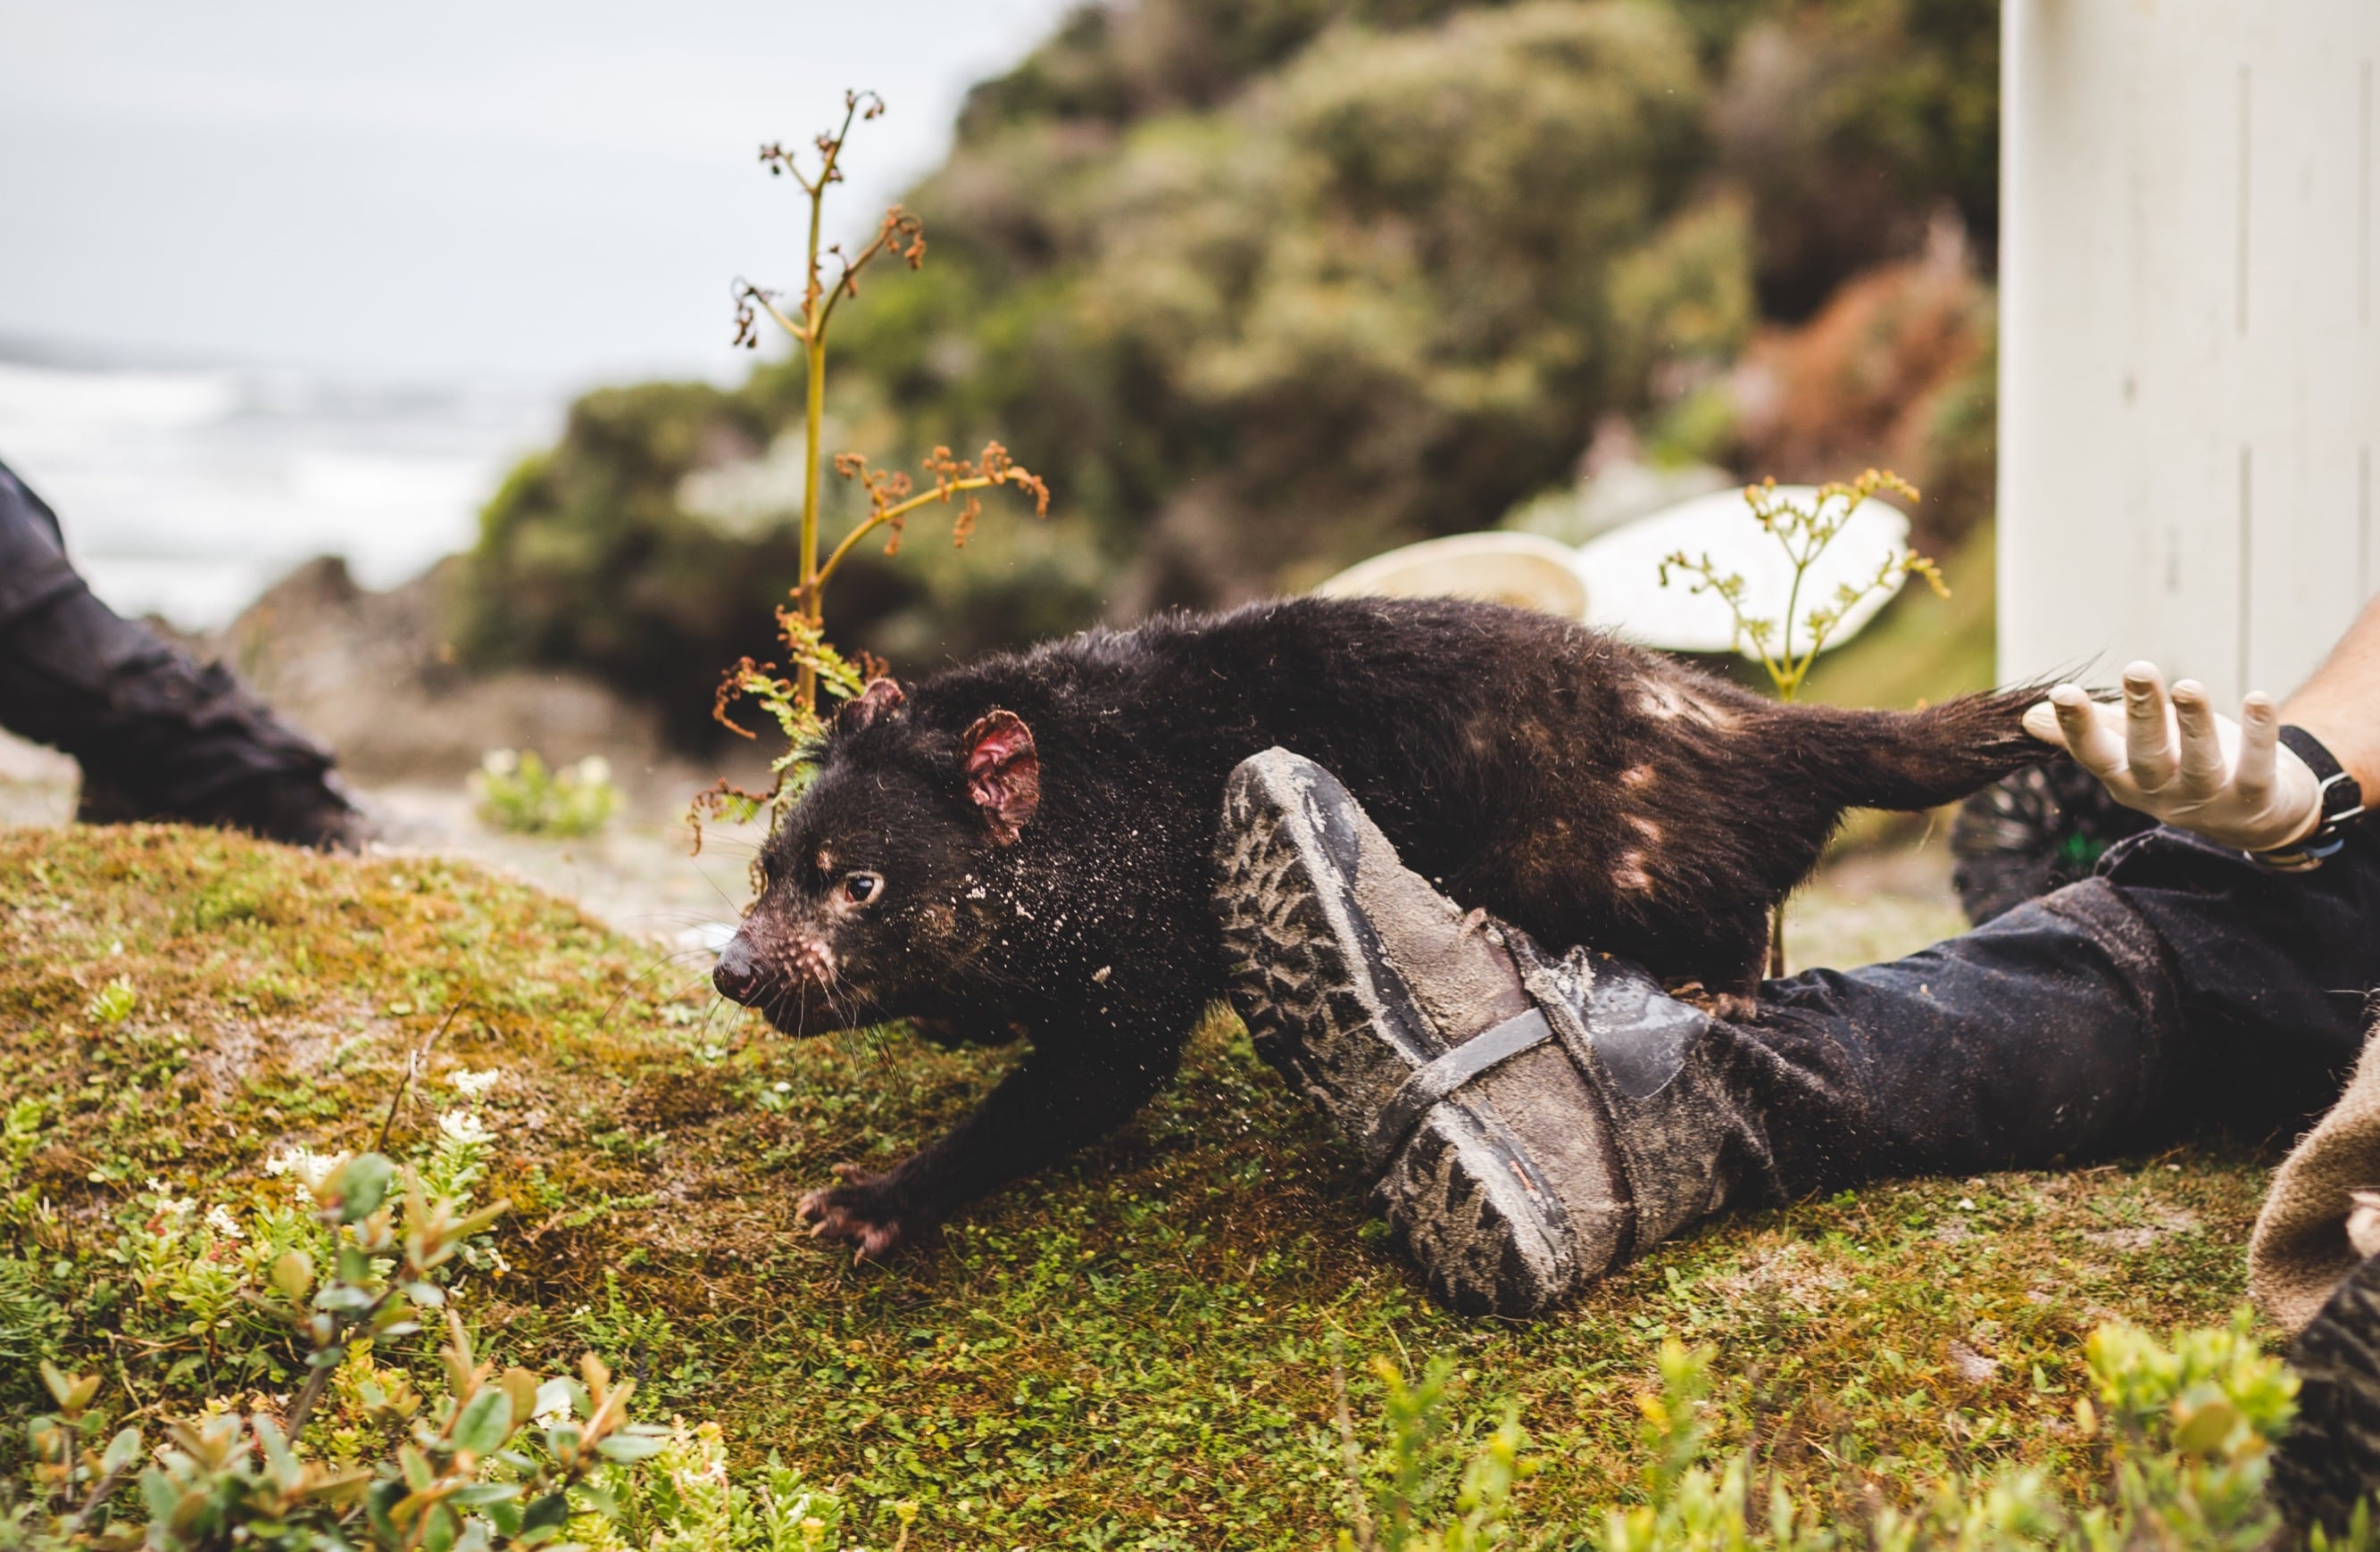 Saving the Tasmanian devil: crowdfunded mission raises new hope - The